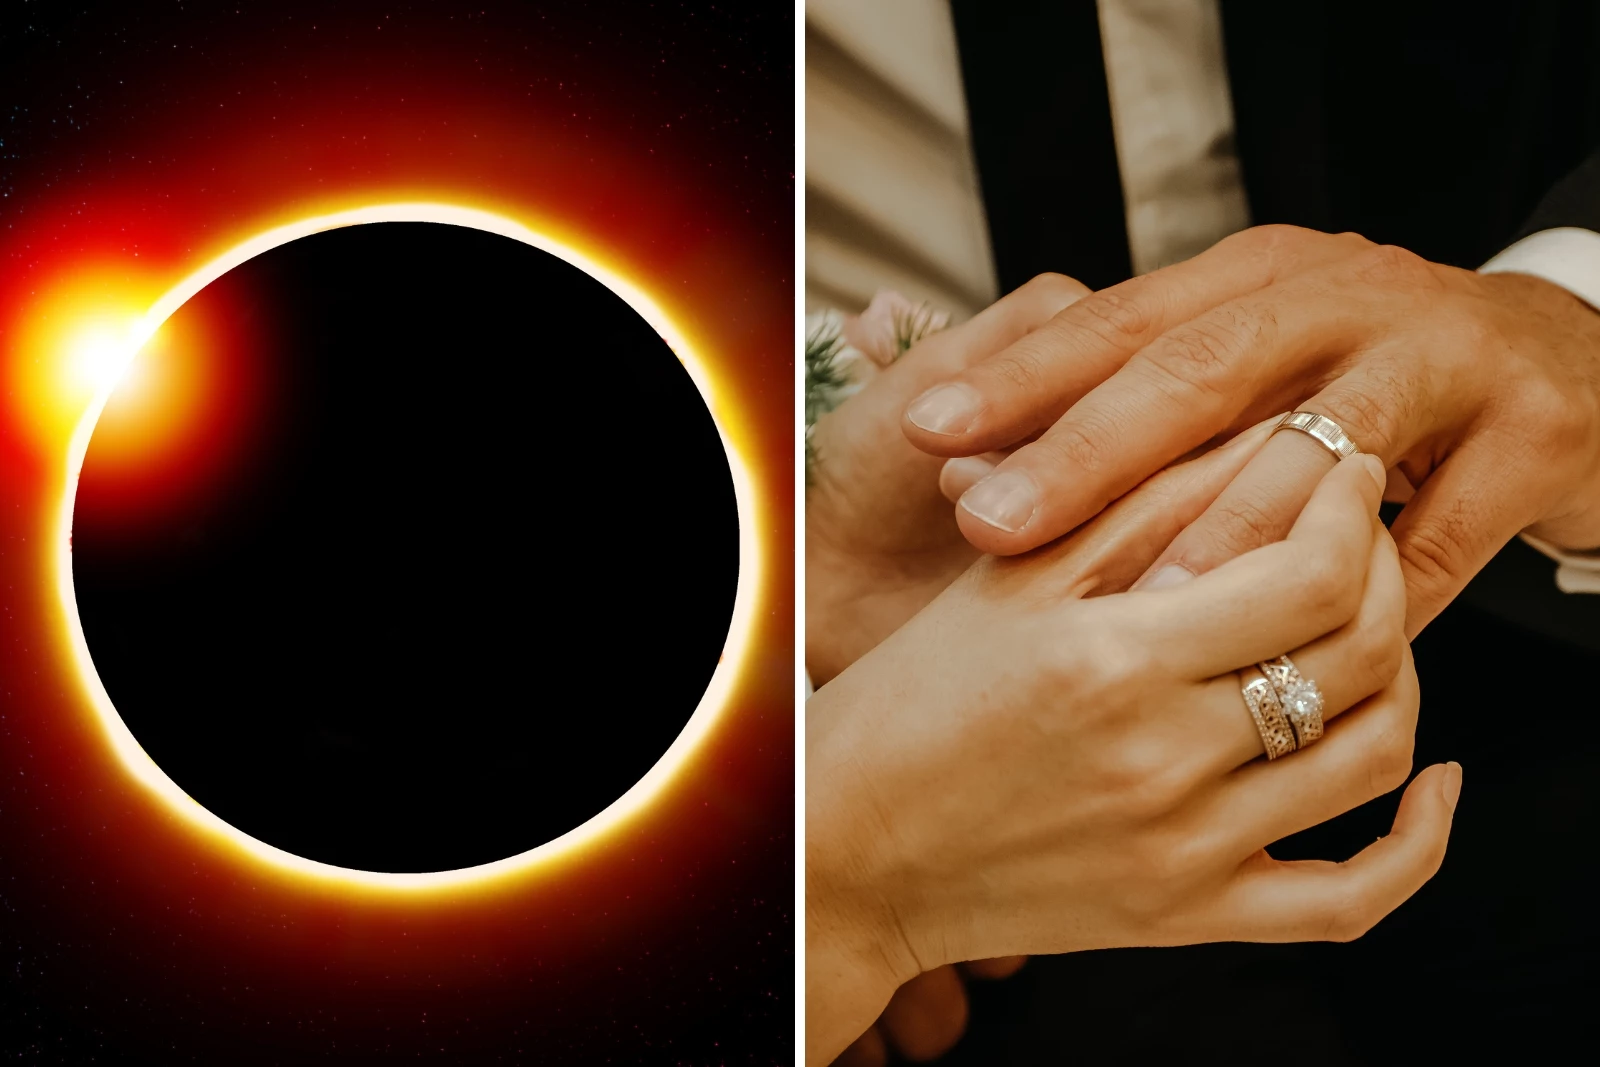 300+ Couples Plan Mass-Wedding in Arkansas Before Eclipse